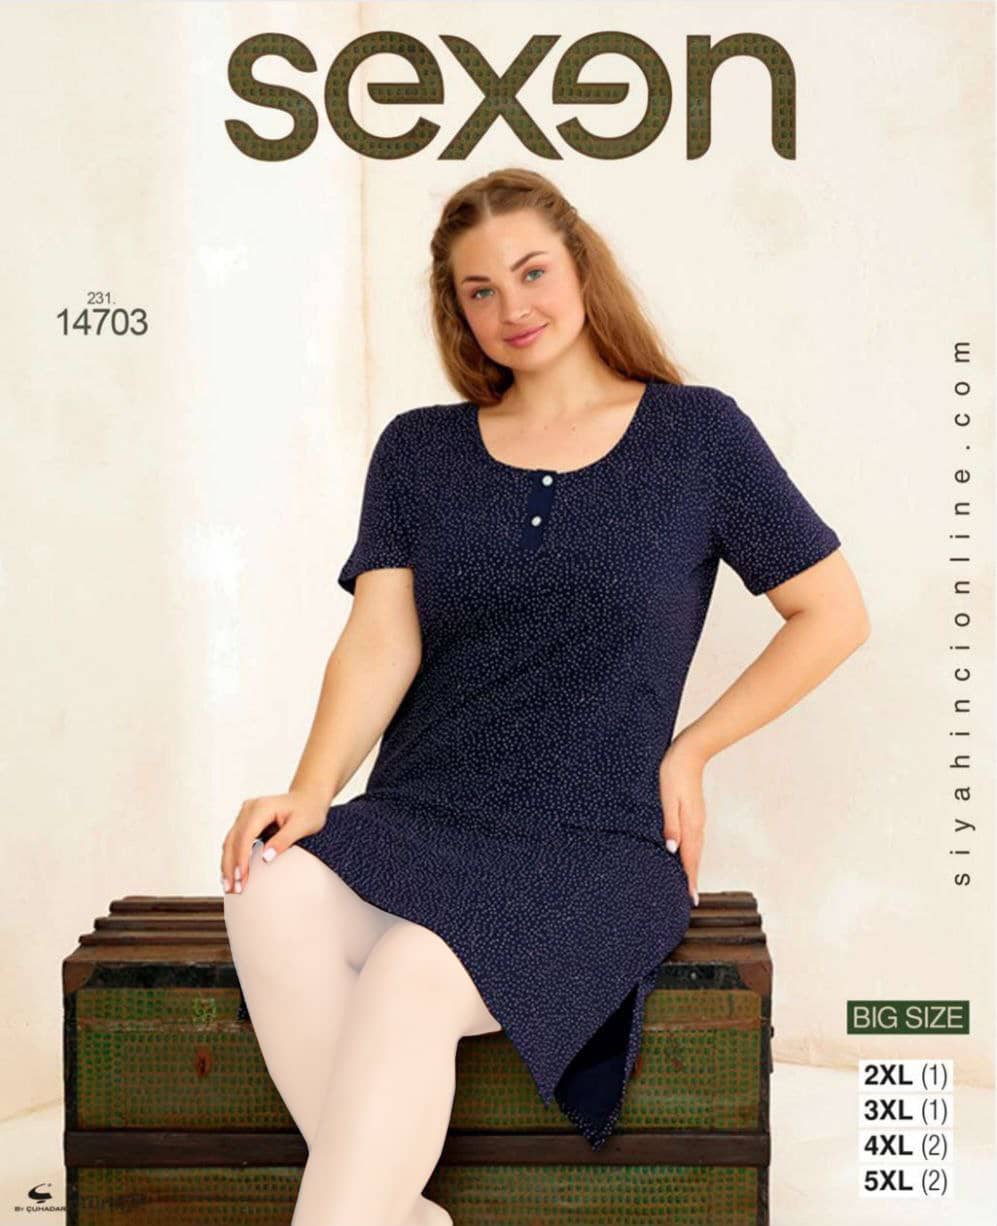 سکسن | Sexen - پیراهن بلند نخی زنانه سایز بزرگ 14703 سکسن